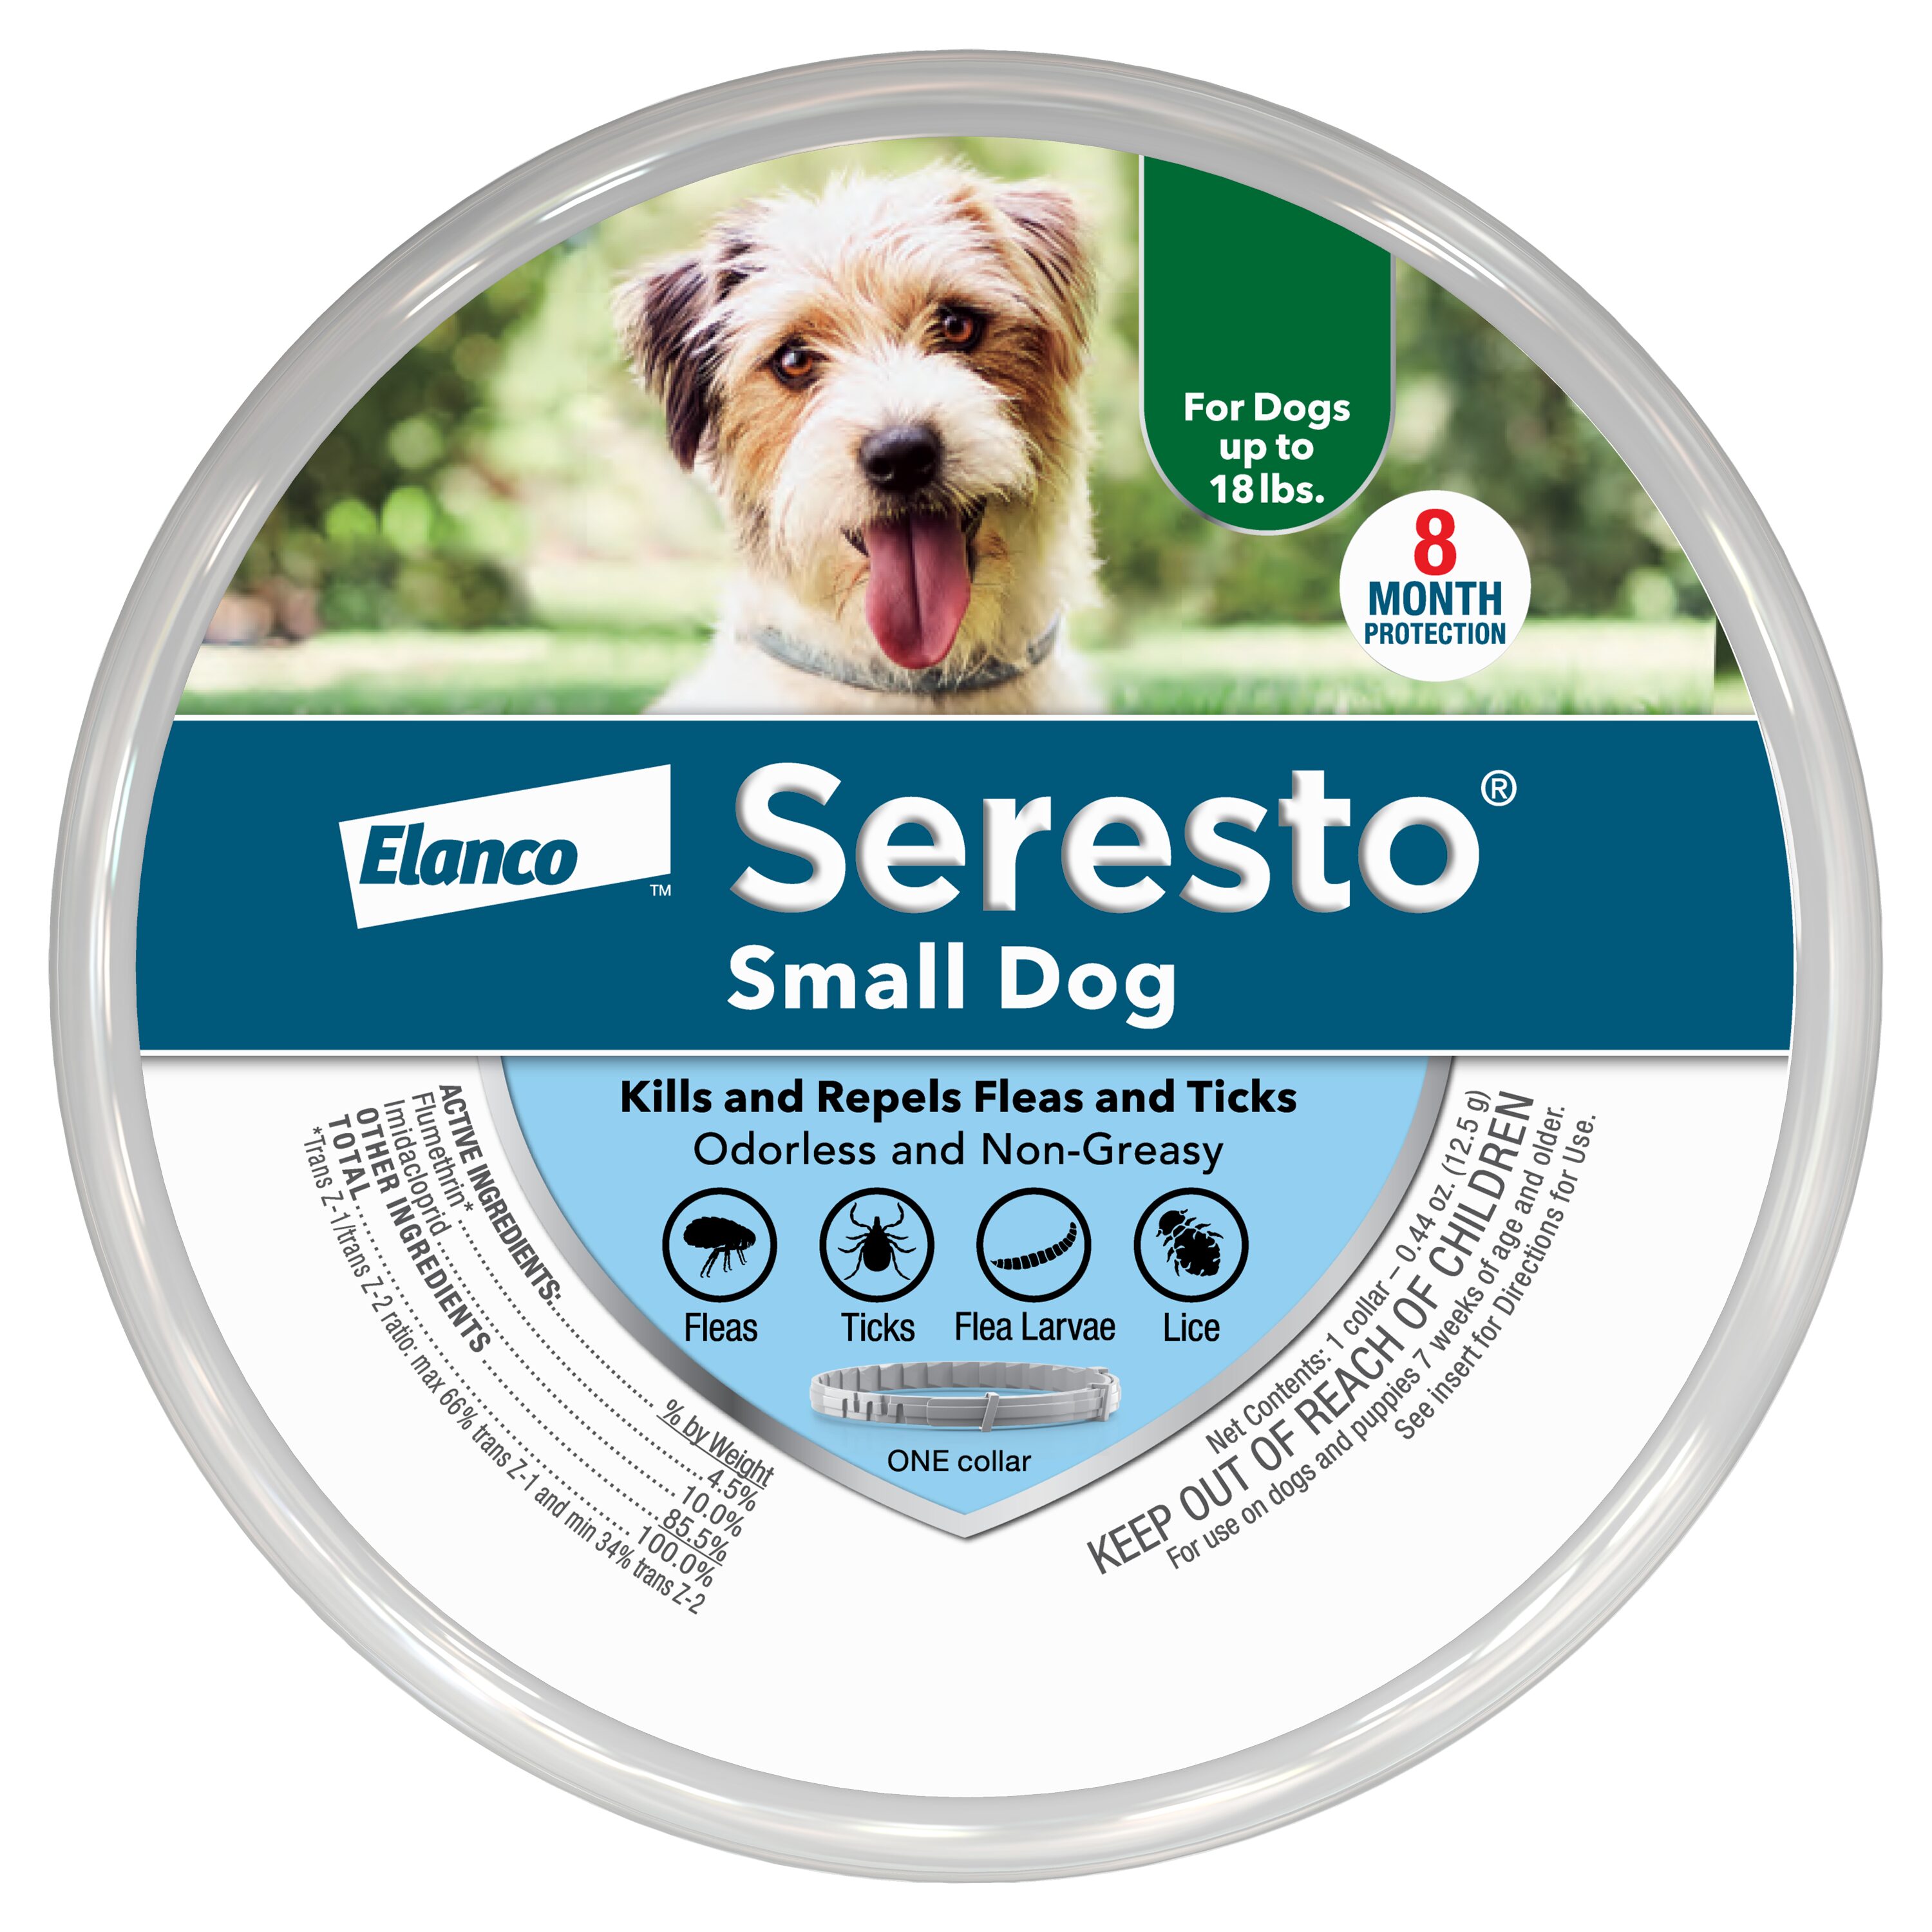 geweten draai Groet Elanco Seresto Small Dog Clamshell in the Pet Flea & Tick Treatments  department at Lowes.com